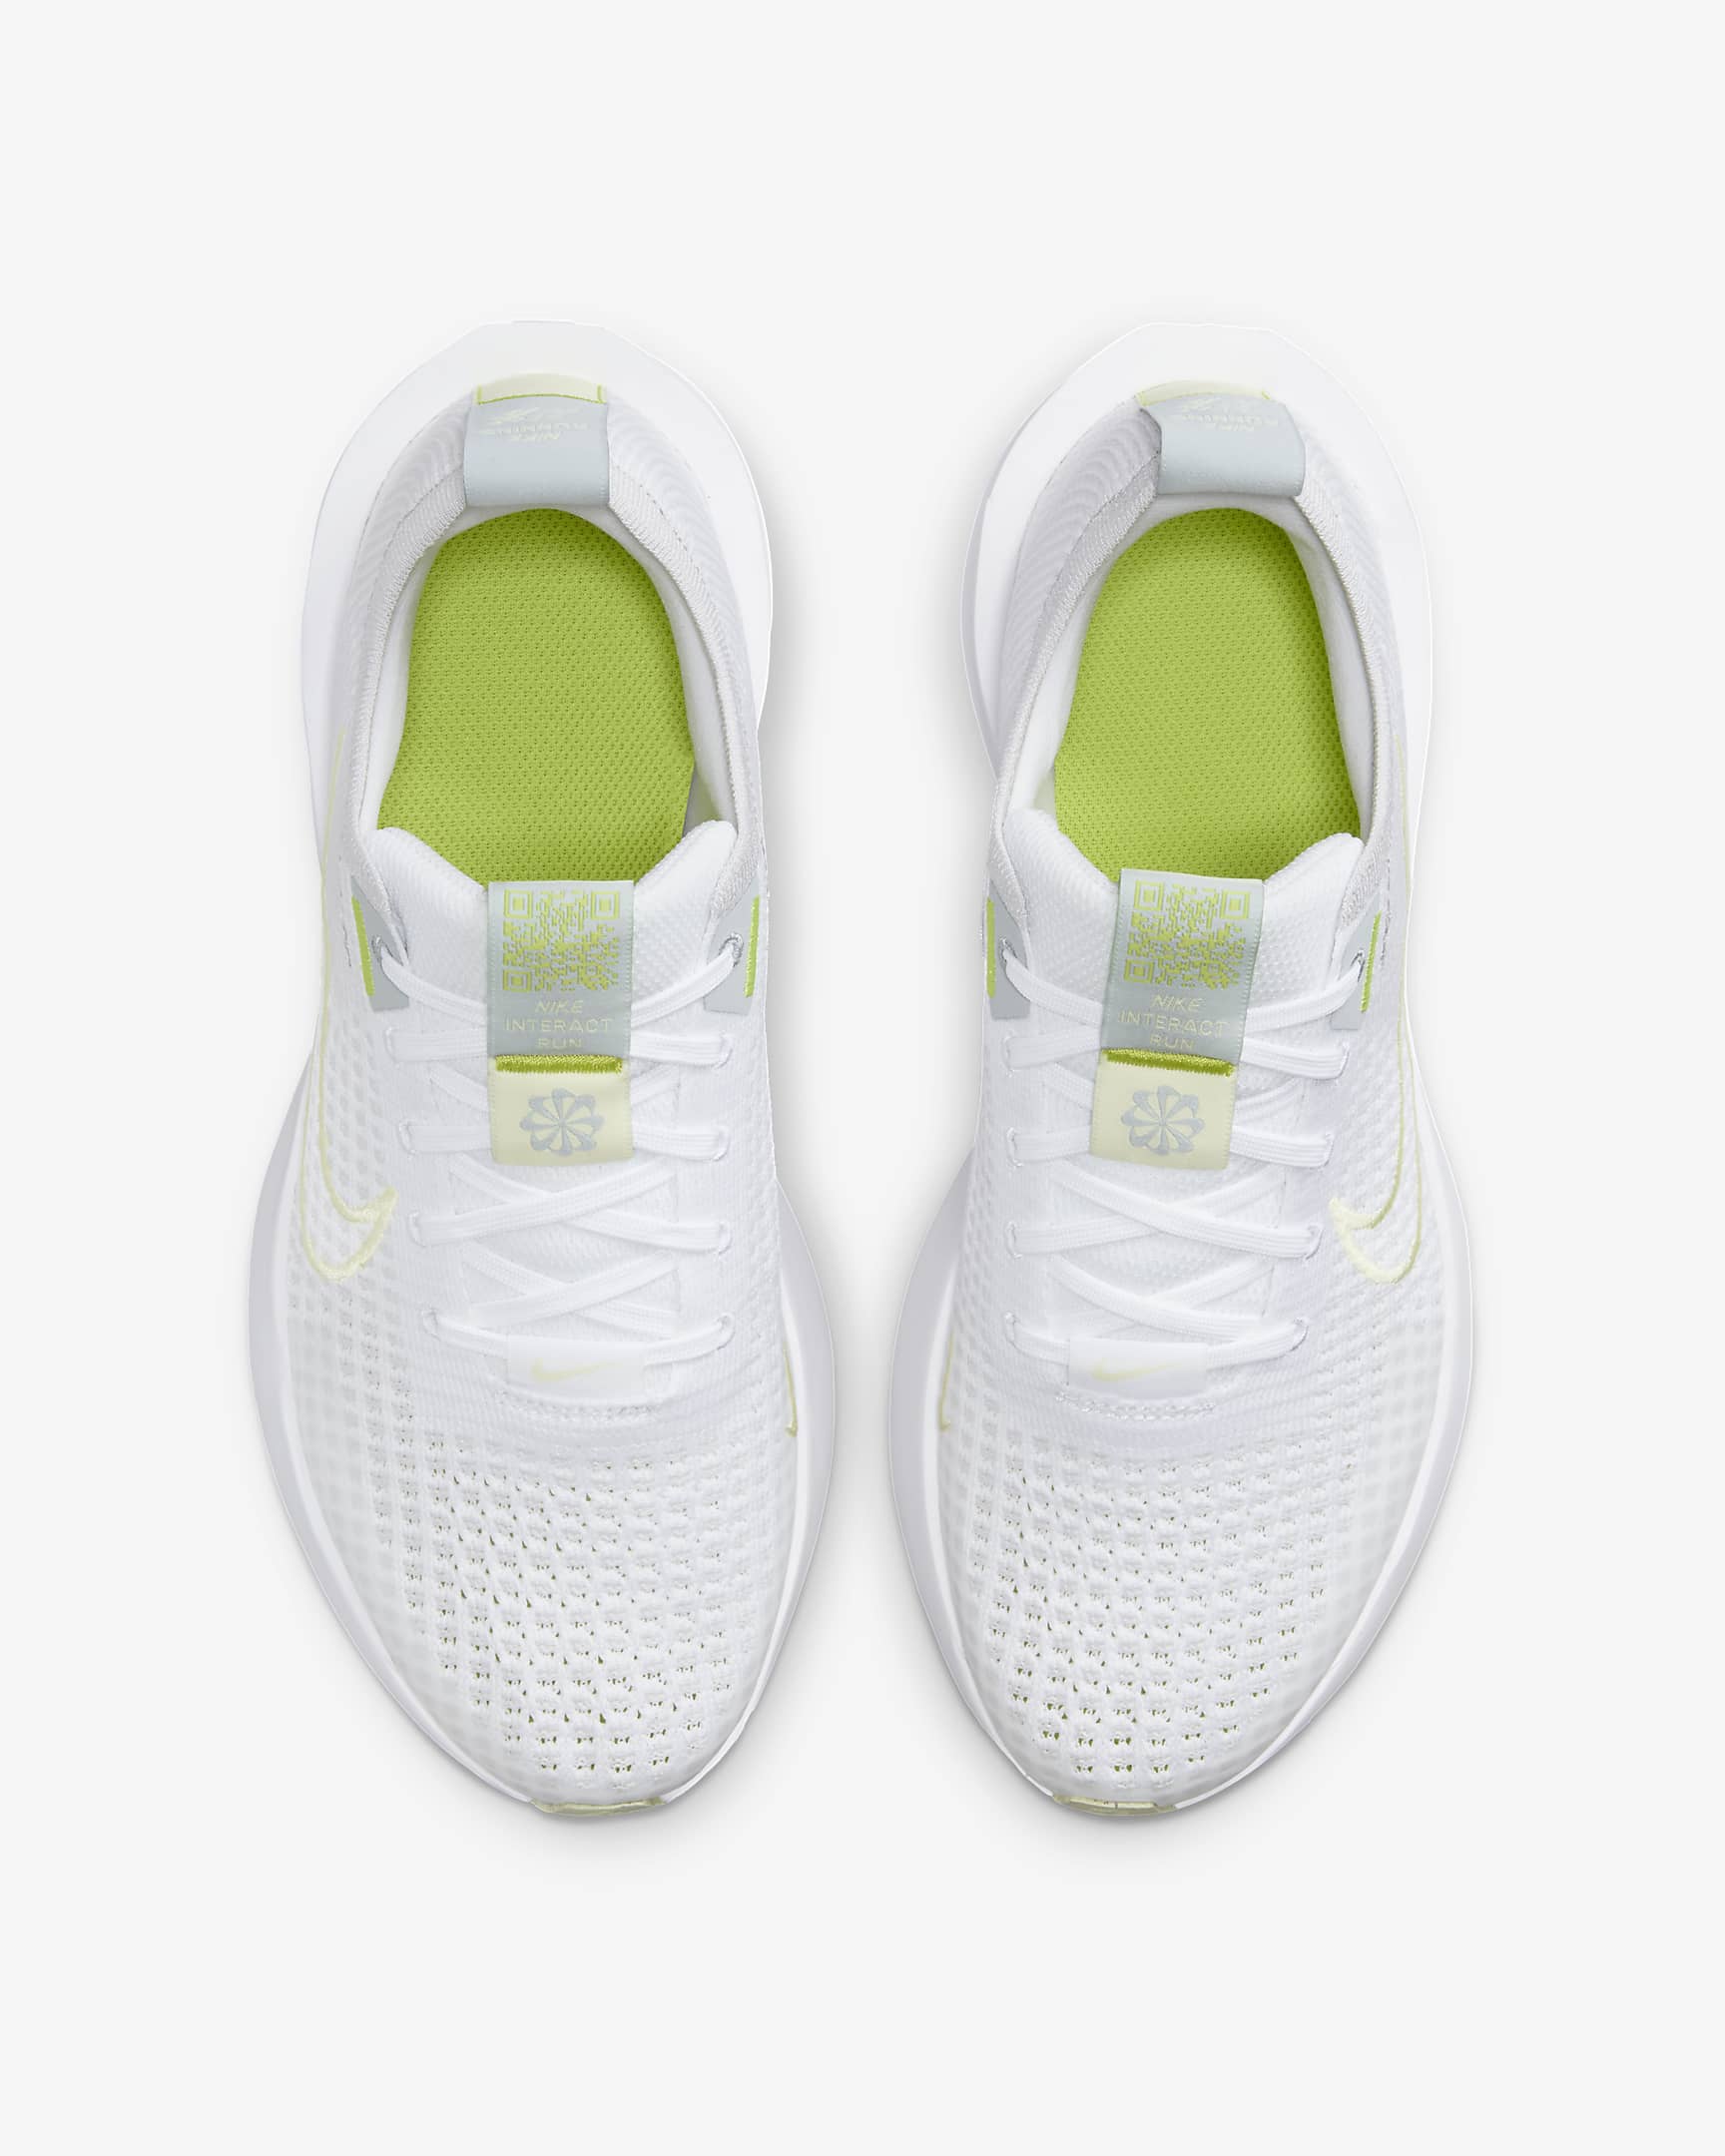 Nike Interact Run Women's Road Running Shoes - White/Vast Grey/Black/Life Lime